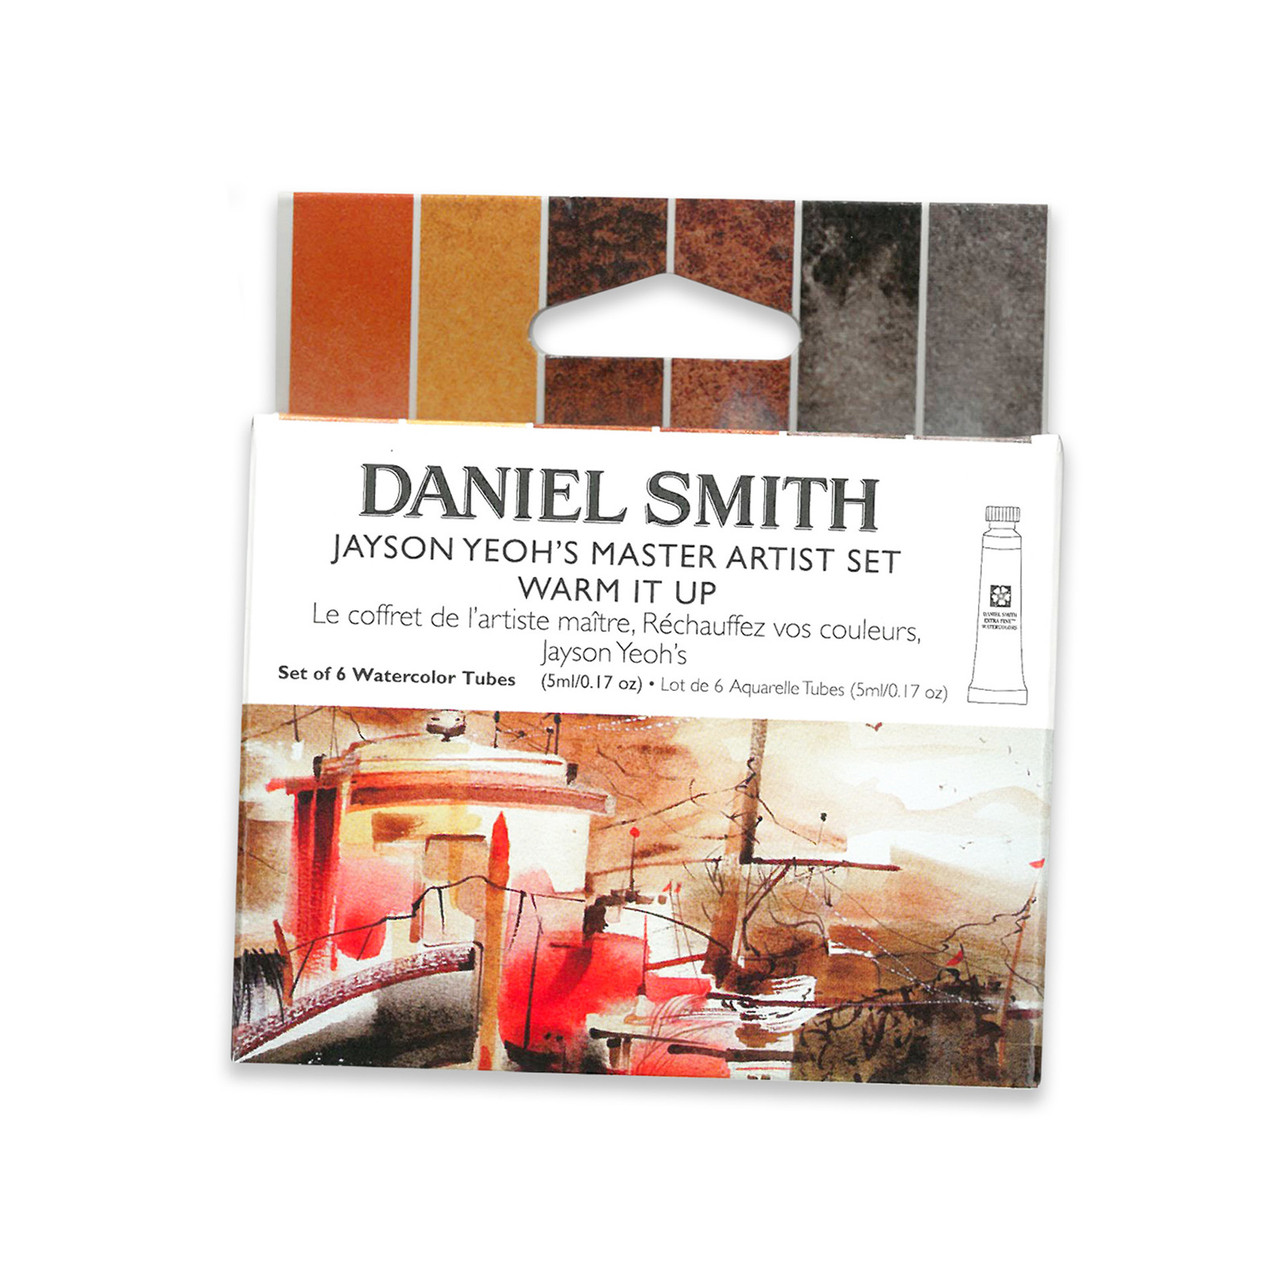 Daniel Smith Extra Fine Watercolors | 5ml tubes